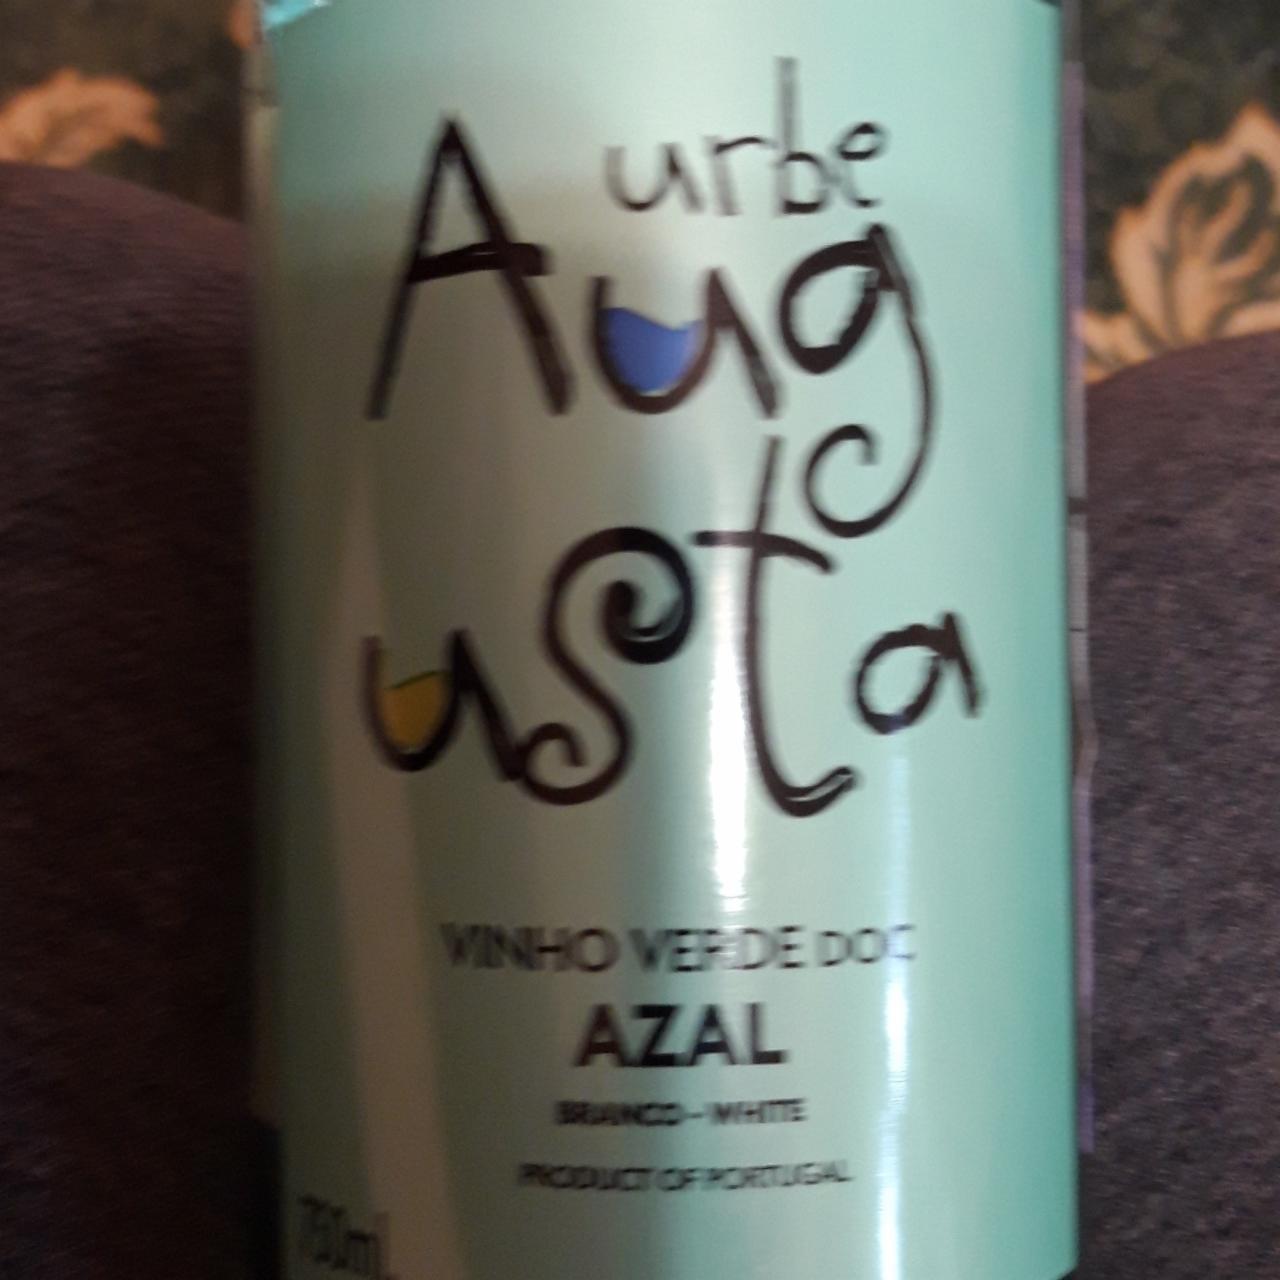 Фото - вино полусухое Португалия azal vinho verde urbe Augusta